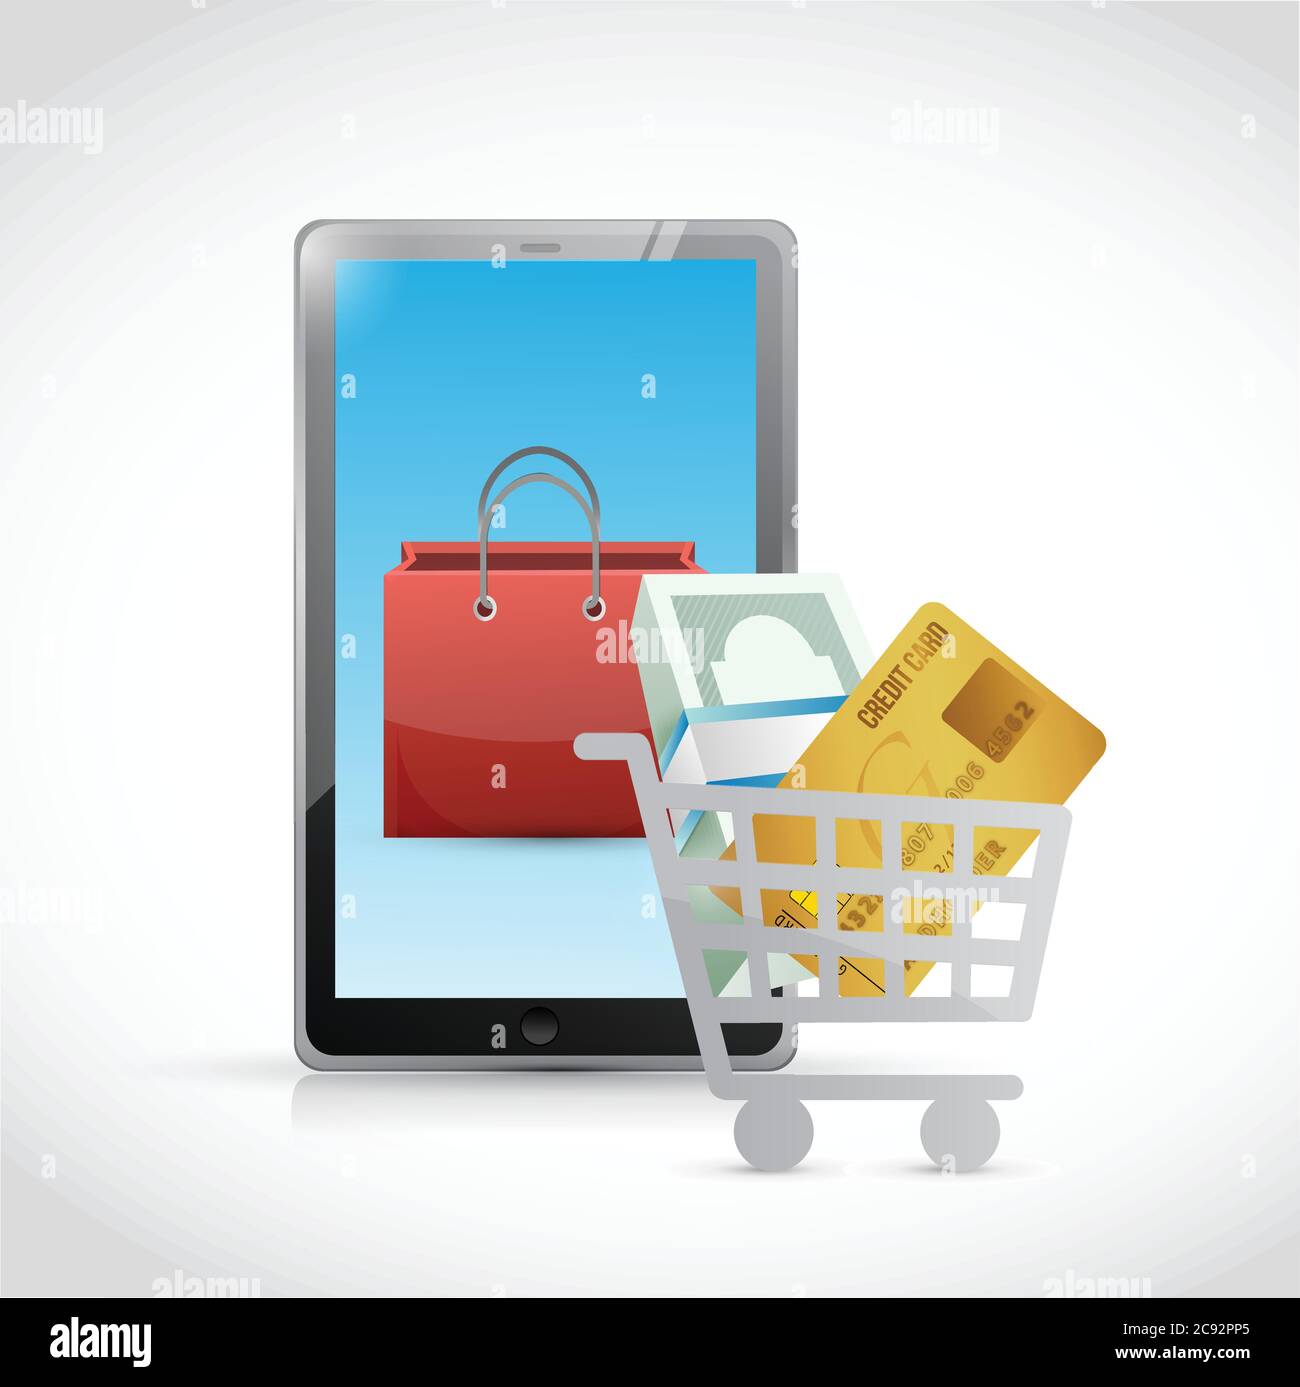 Online shopping concept illustration design over a white background Stock Vector